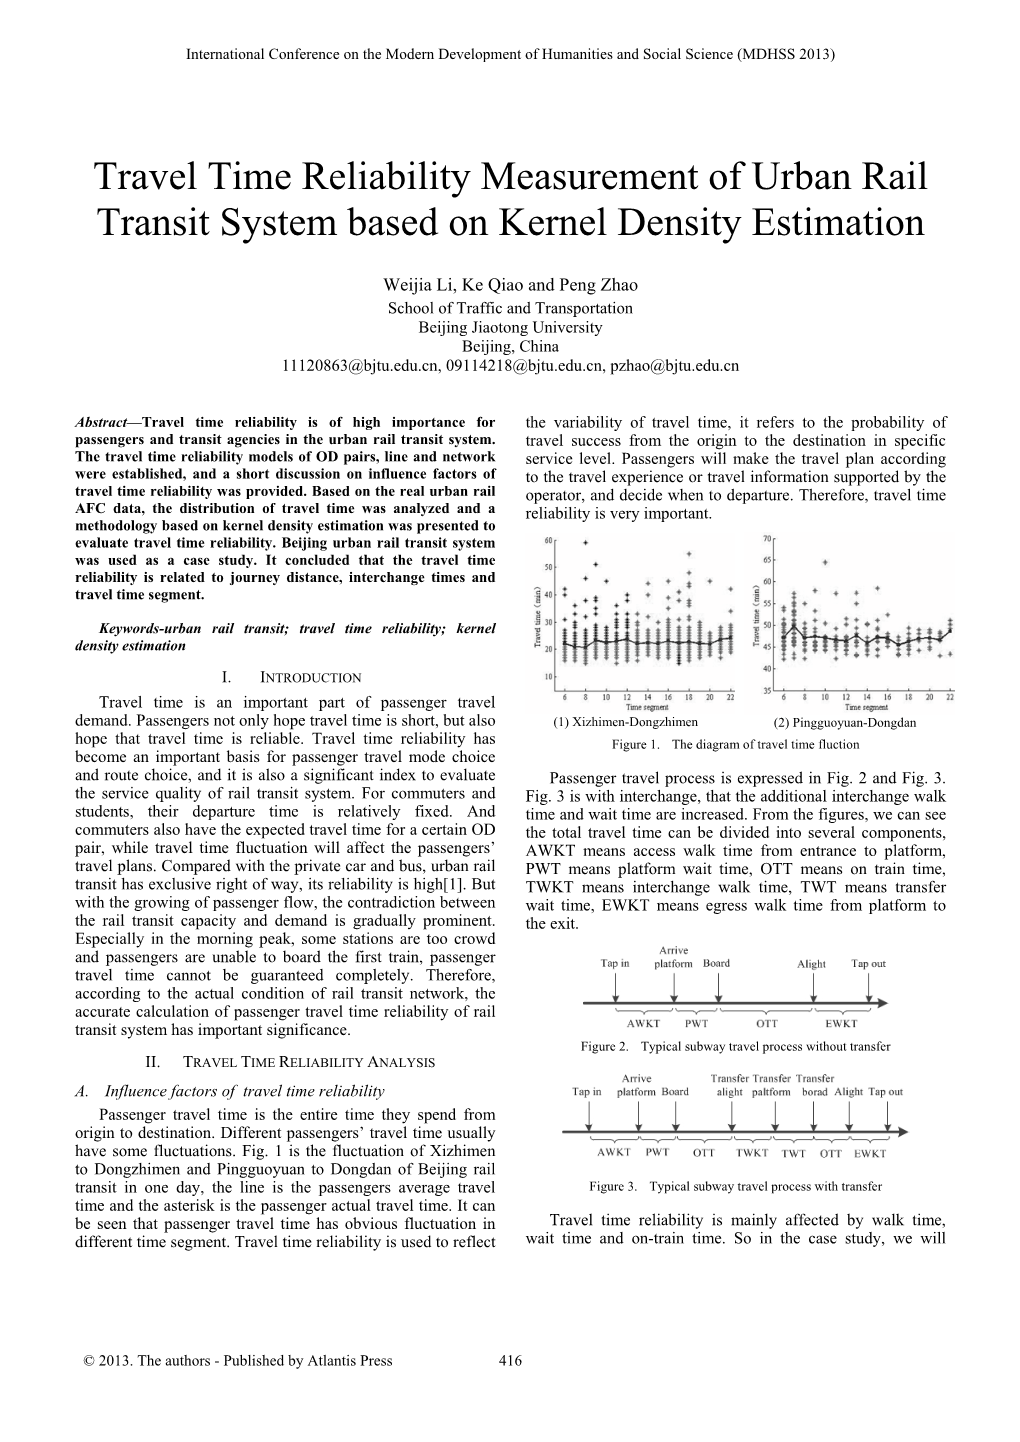 Travel Time Reliability Measurement of Urban Rail Transit System Based on Kernel Density Estimation